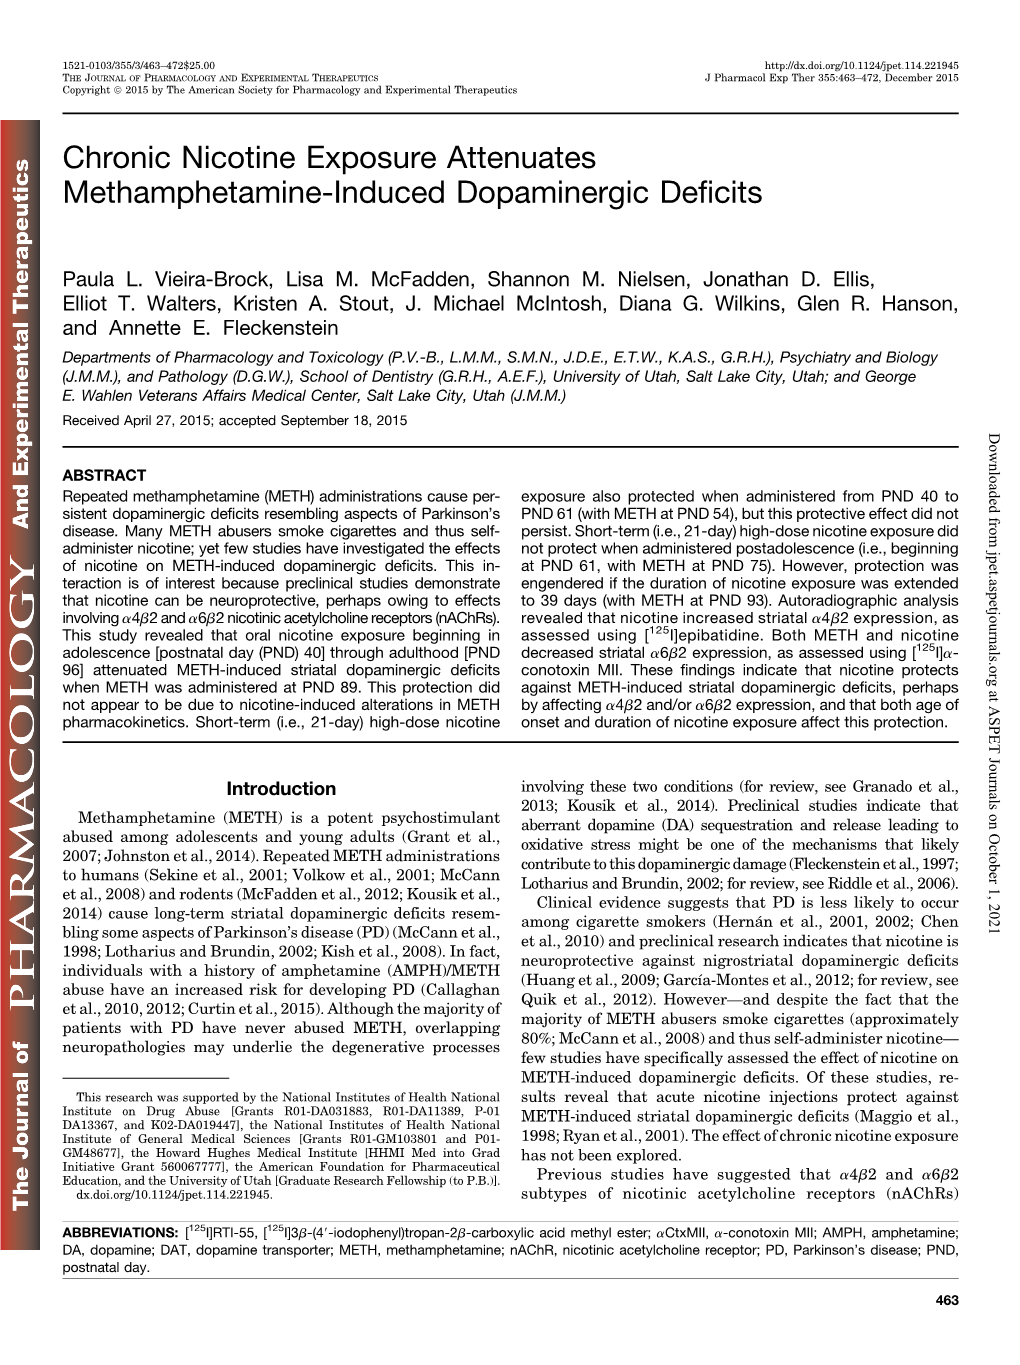 Chronic Nicotine Exposure Attenuates Methamphetamine-Induced Dopaminergic Deficits